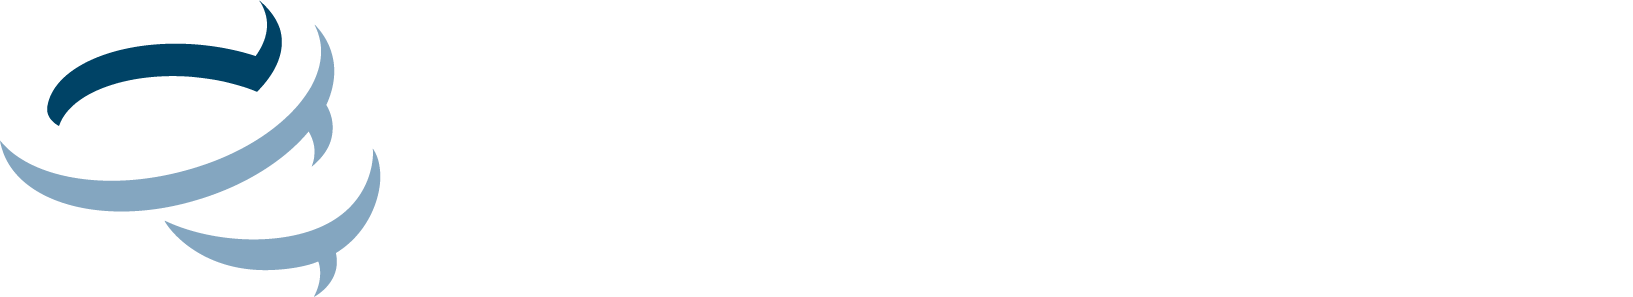 Prototal logo